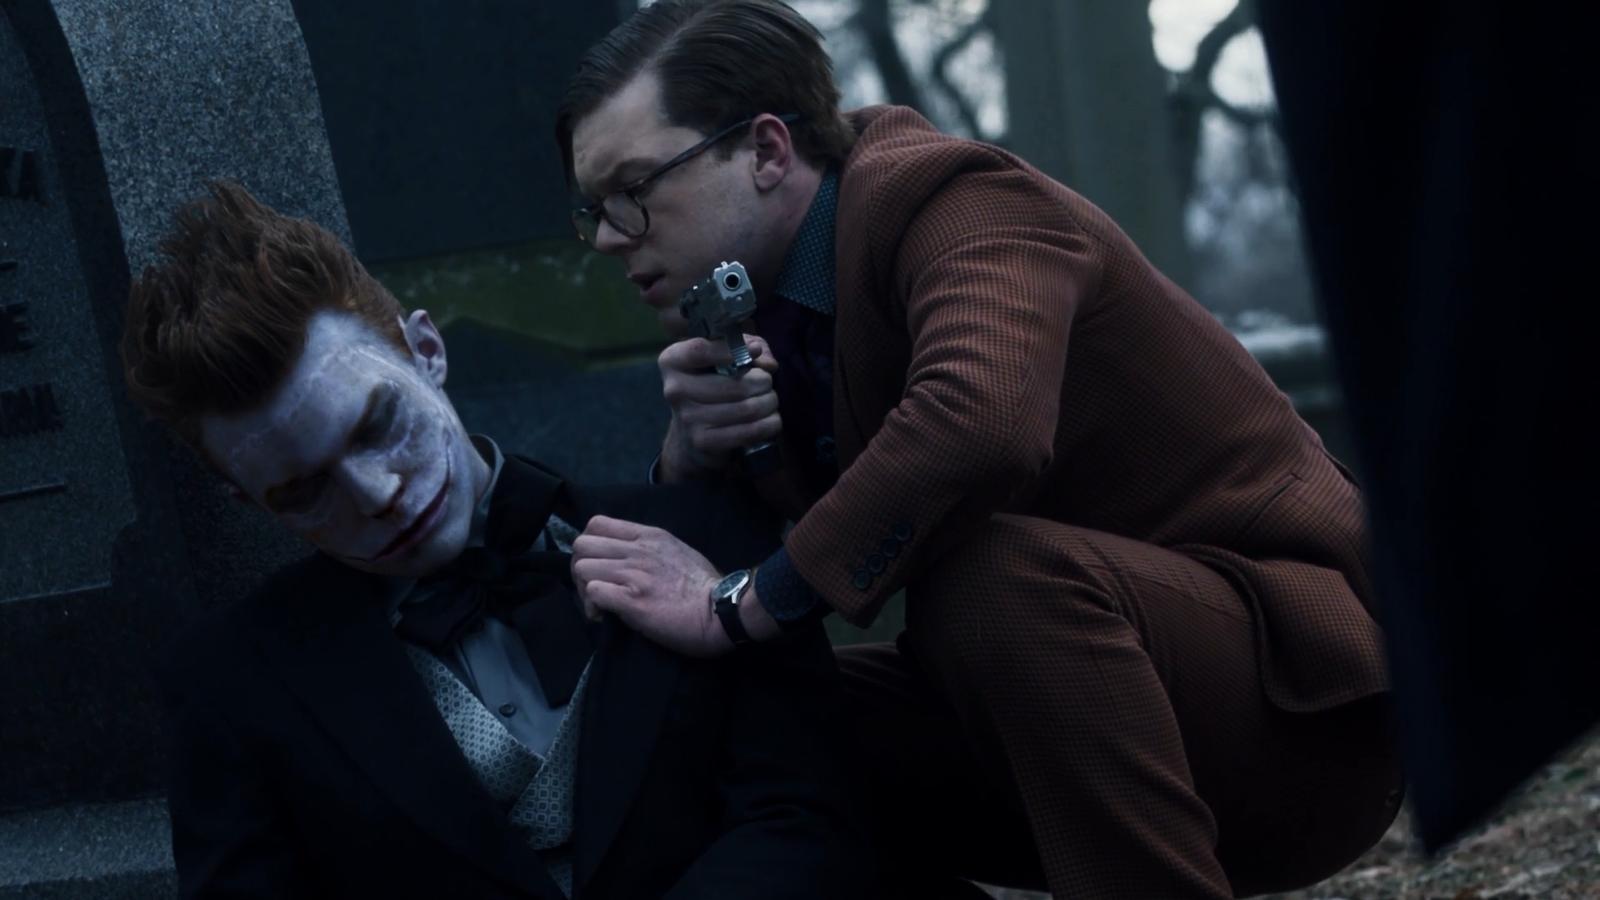 Gotham A Dark Knight: That Old Corpse (TV Episode 2018)